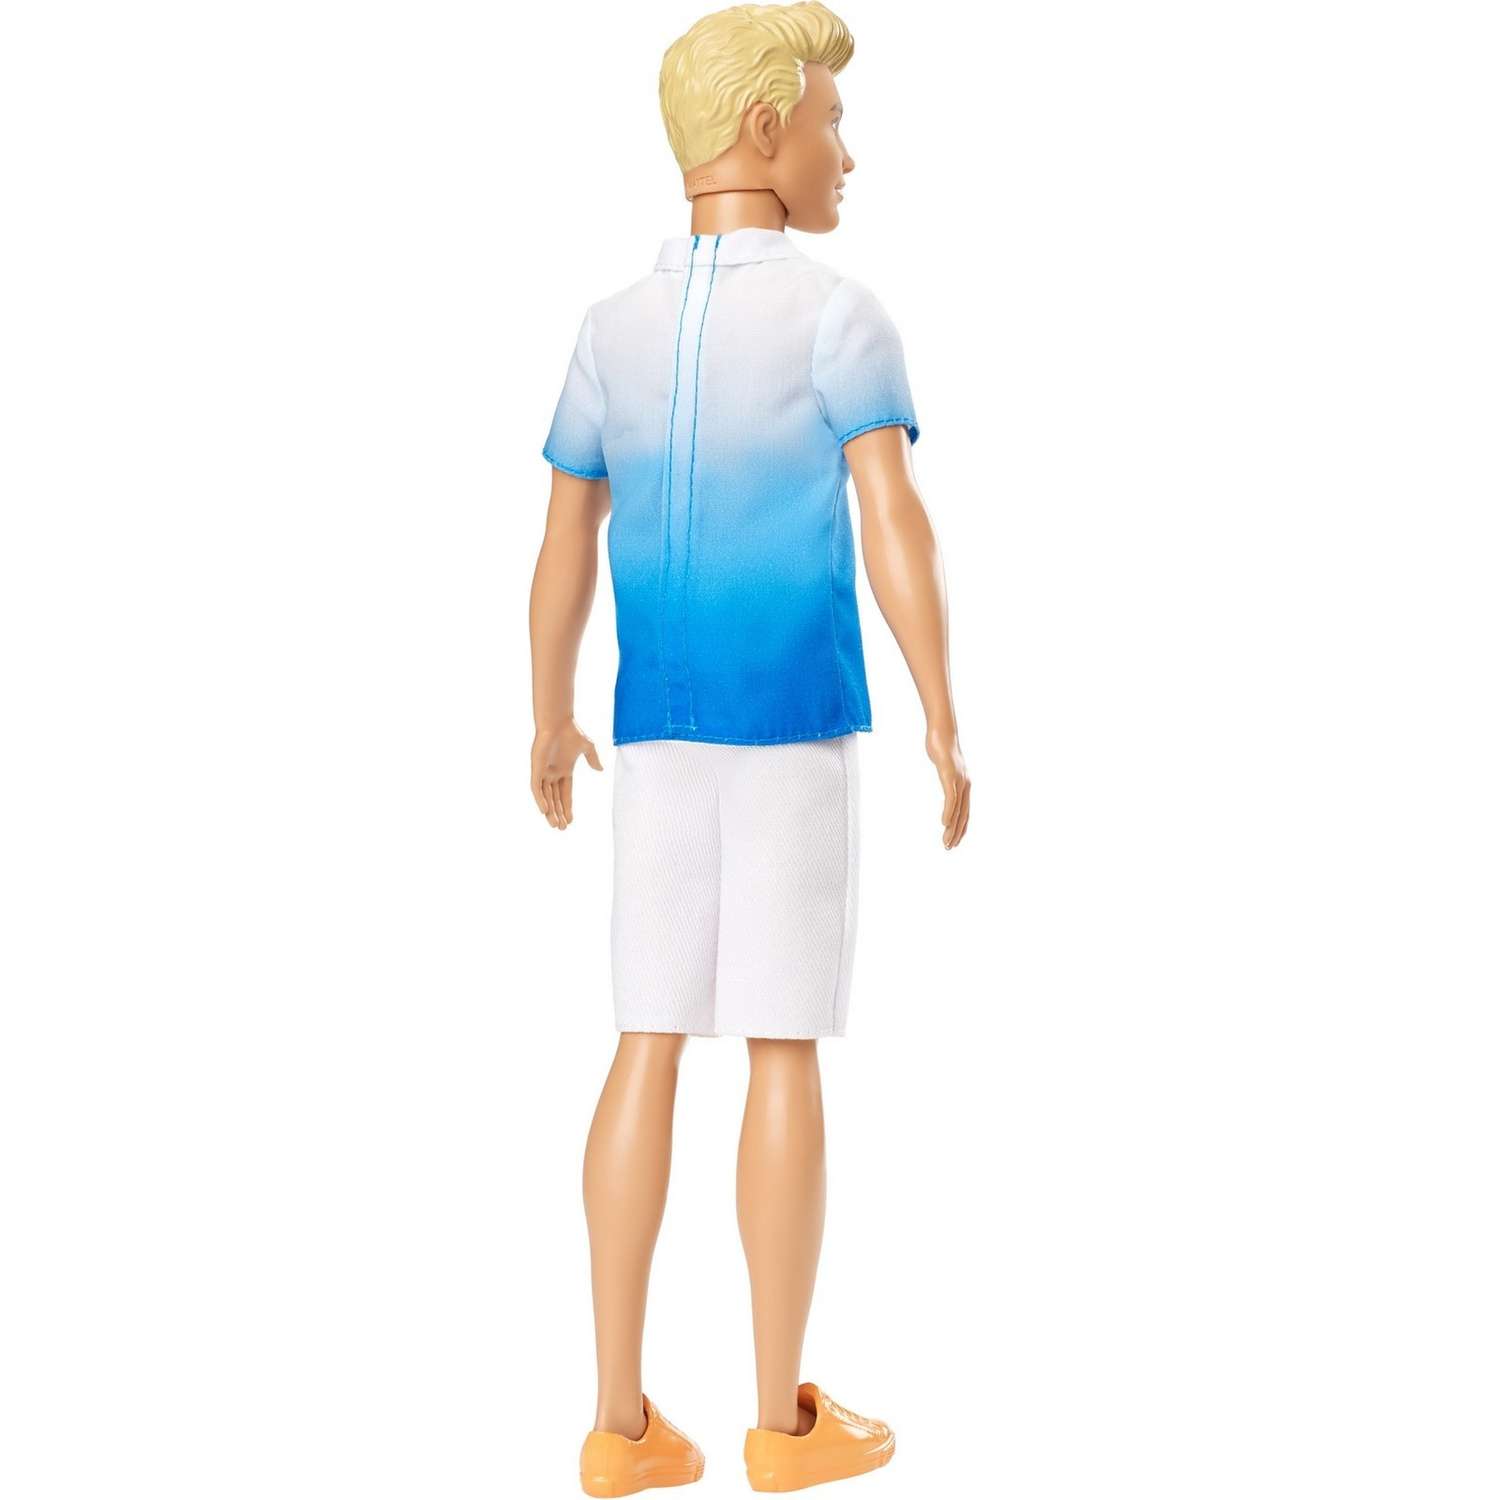 Кукла Barbie Игра с модой Кен в голубой рубашке GDV12 DWK44 - фото 5